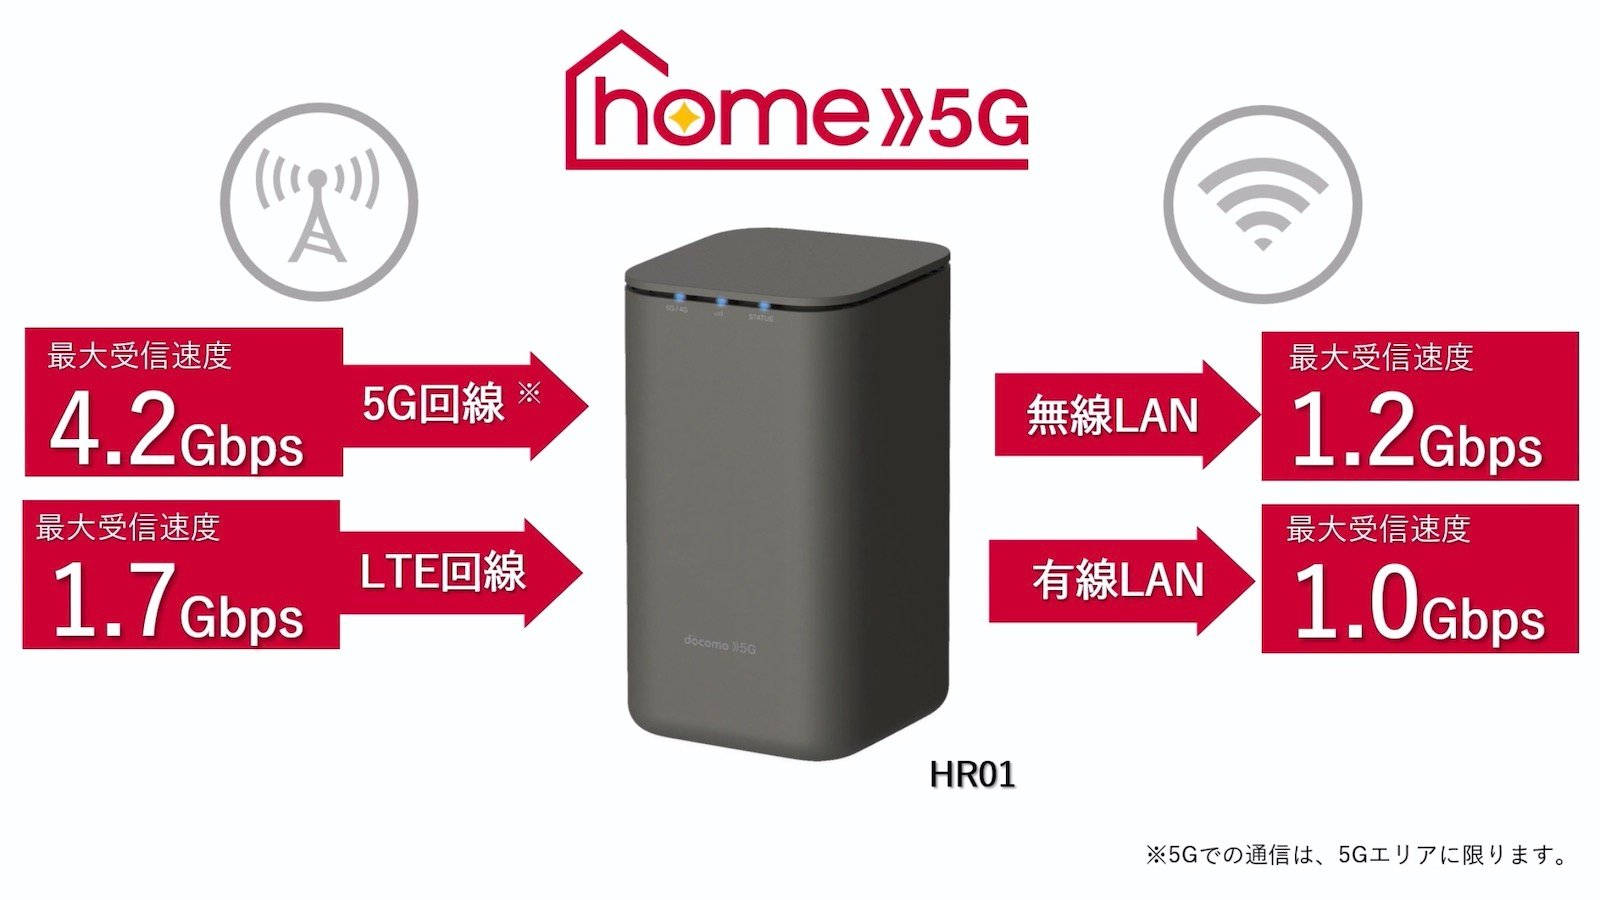 「home 5G HR01」の通信速度